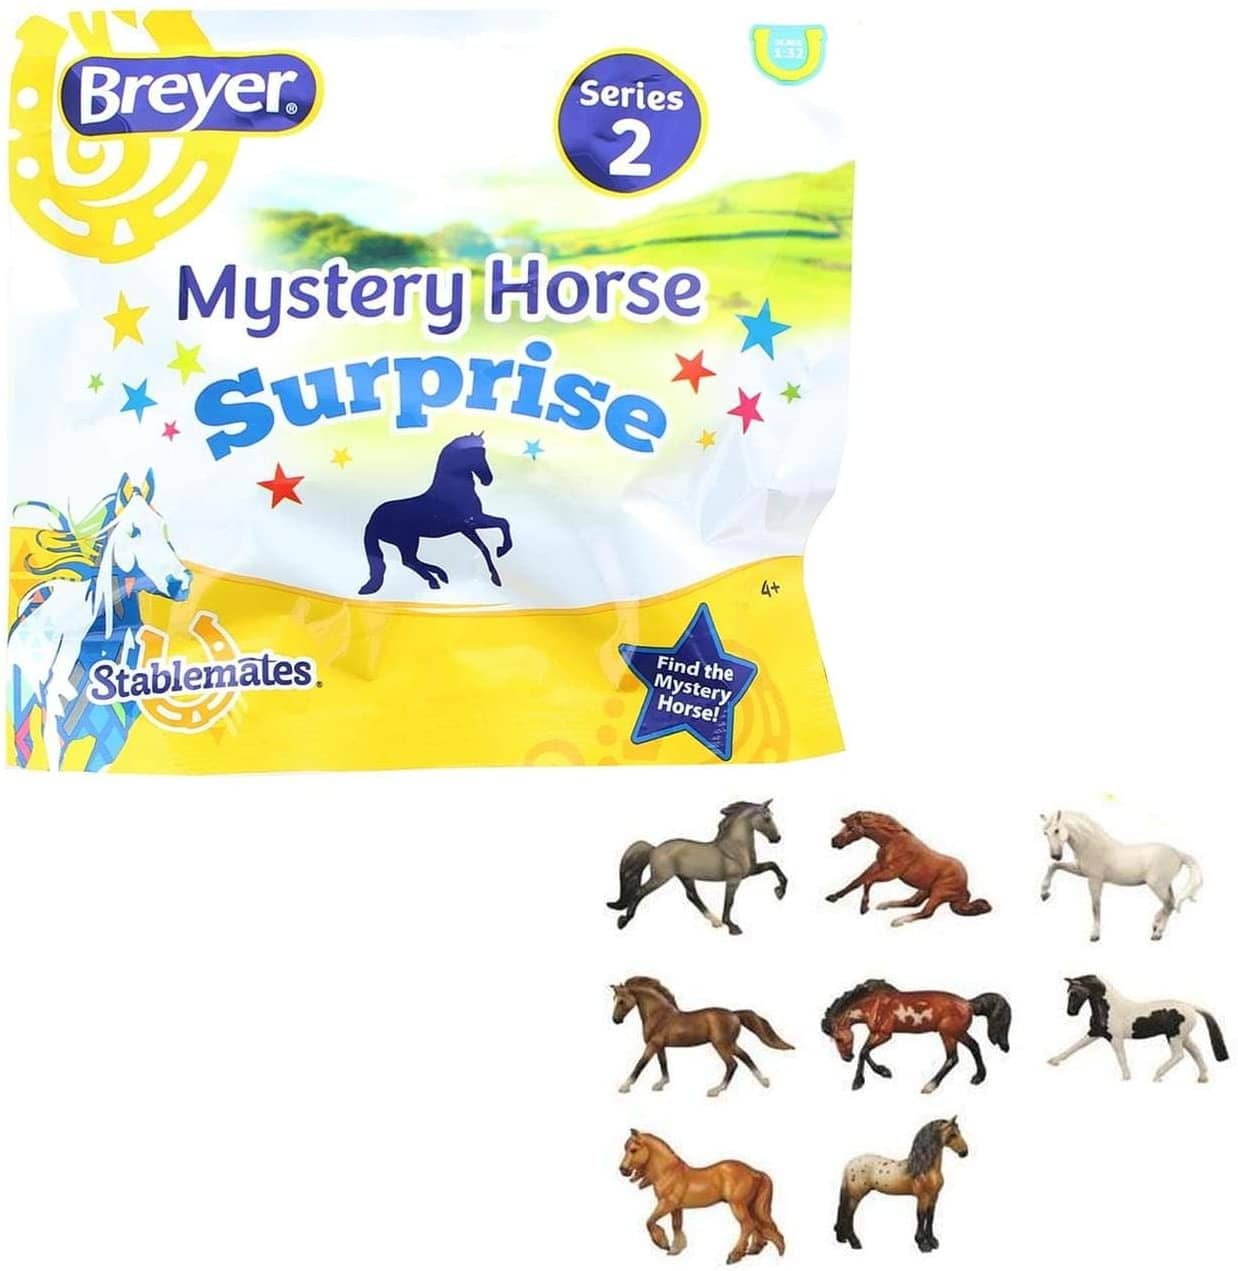 Breyer Mystery Horse Surprise Blind Bag Series 2-Kidding Around NYC